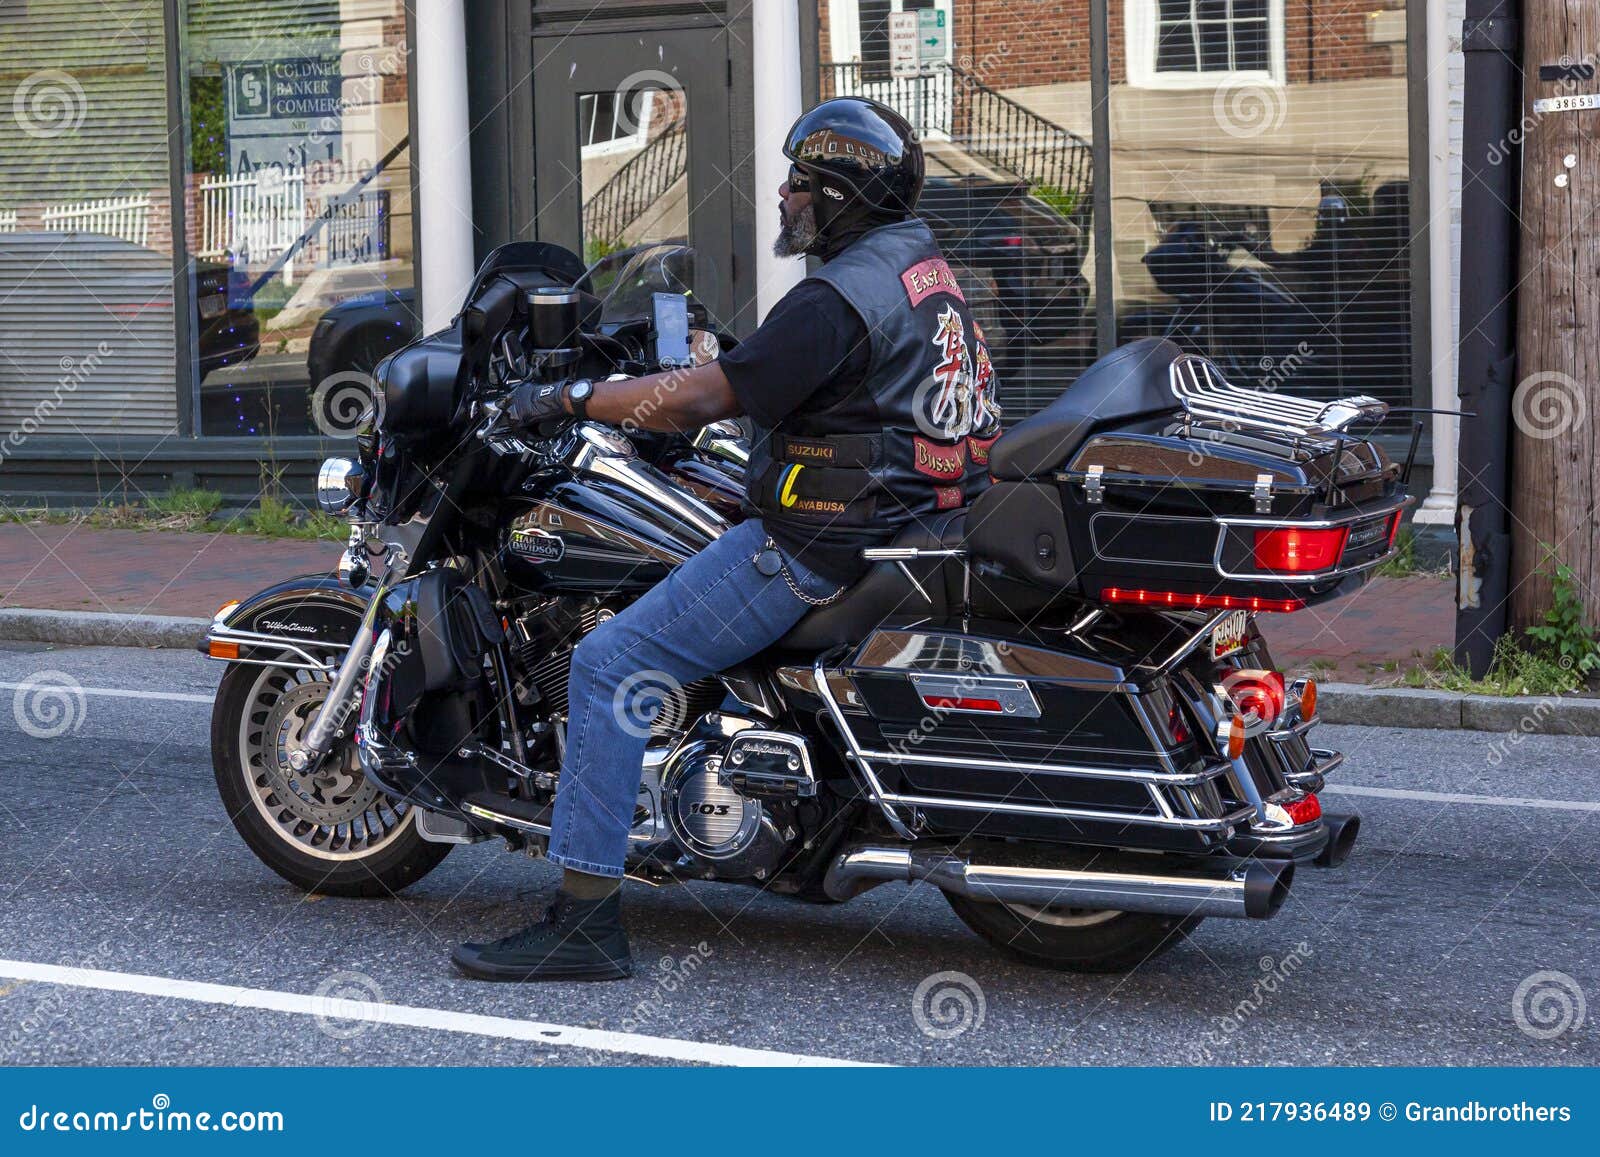 African American Man Riding Harley Davidson Editorial Stock Image ... اكسسوارز